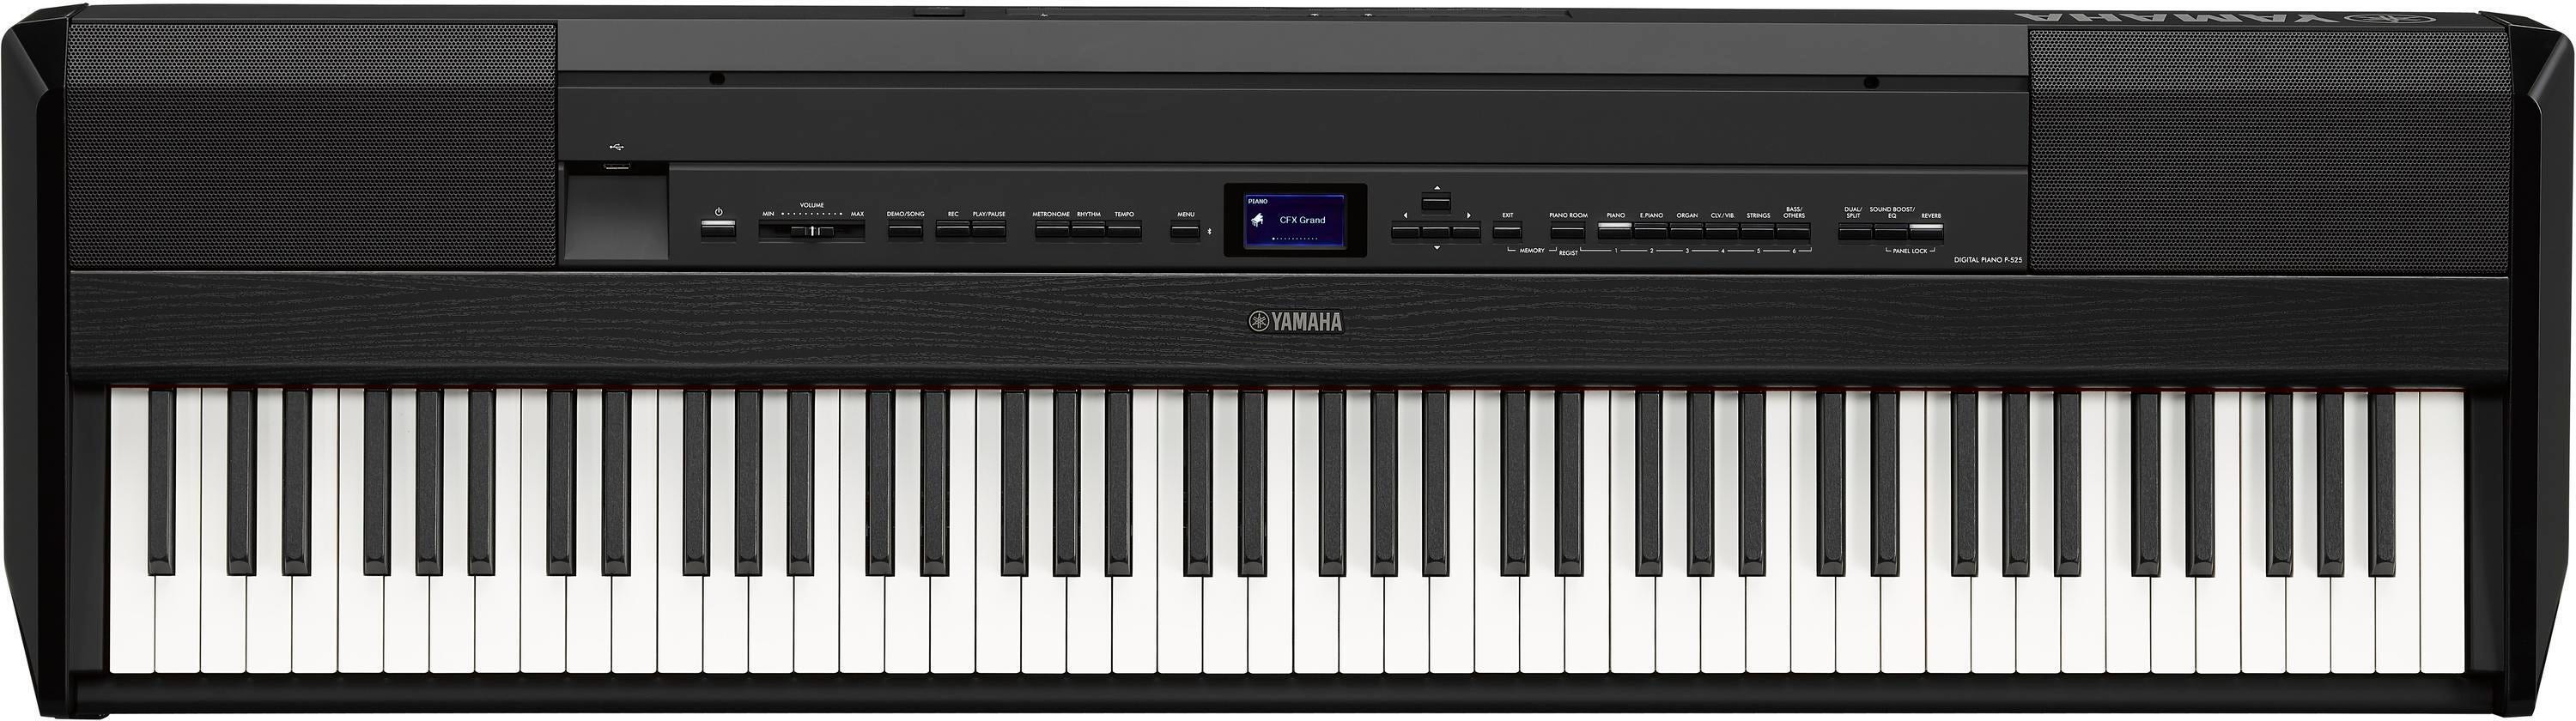 Yamaha P-225 Digital Piano - Black COMPLETE HOME BUNDLE PLUS